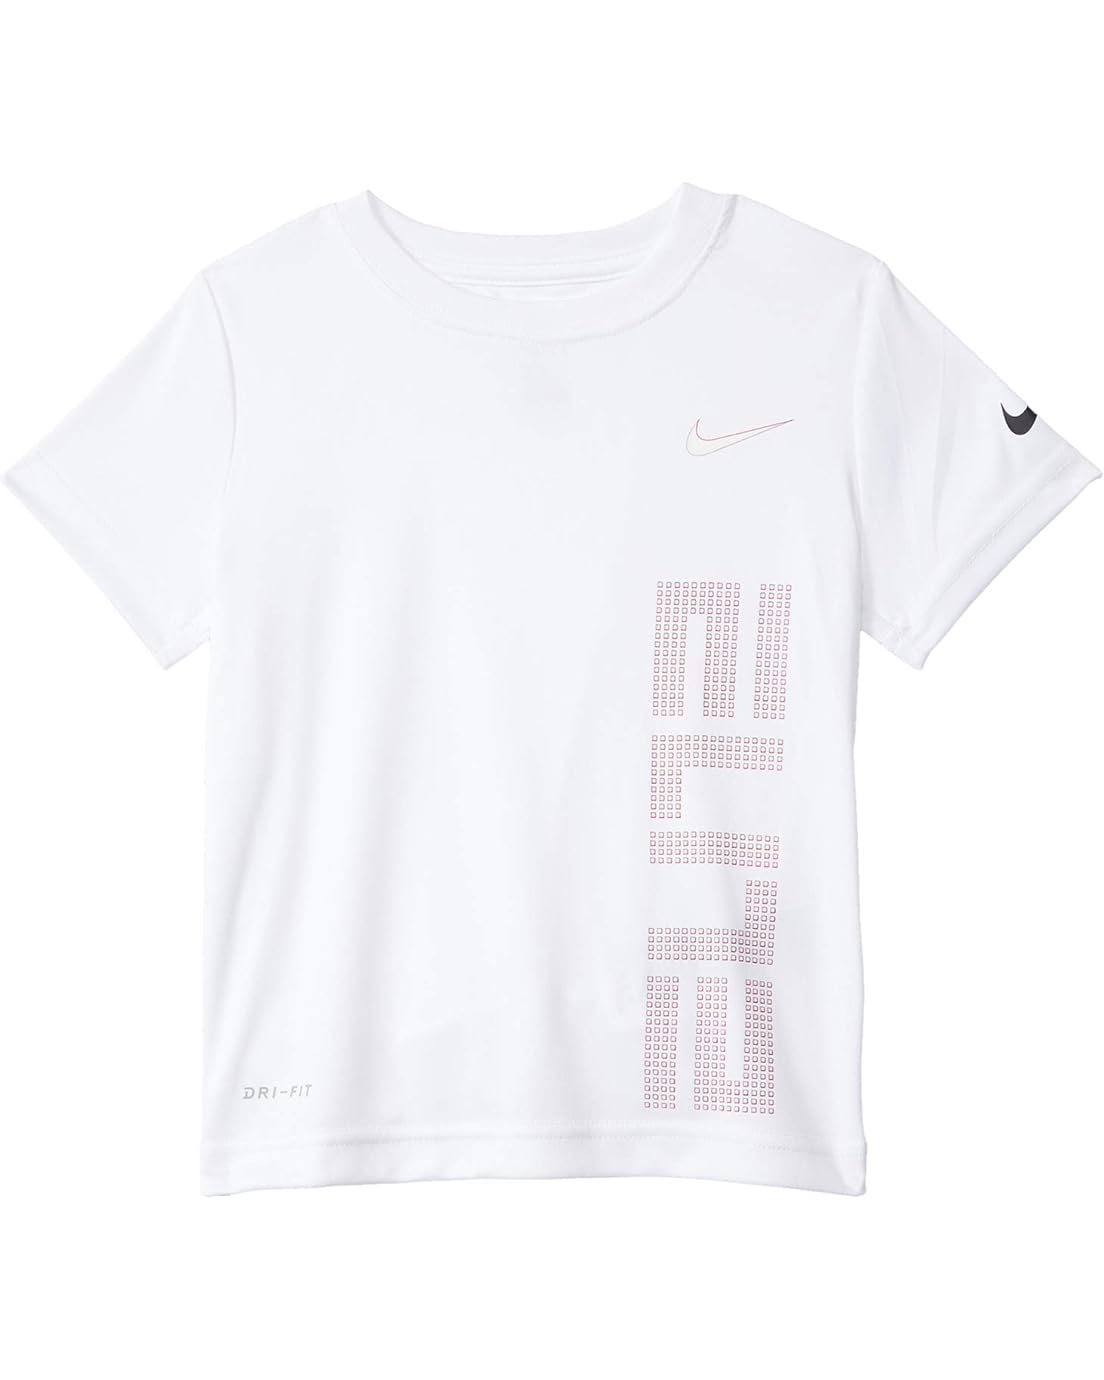 Nike Kids Elite Graphic T-Shirt (Little Kids)